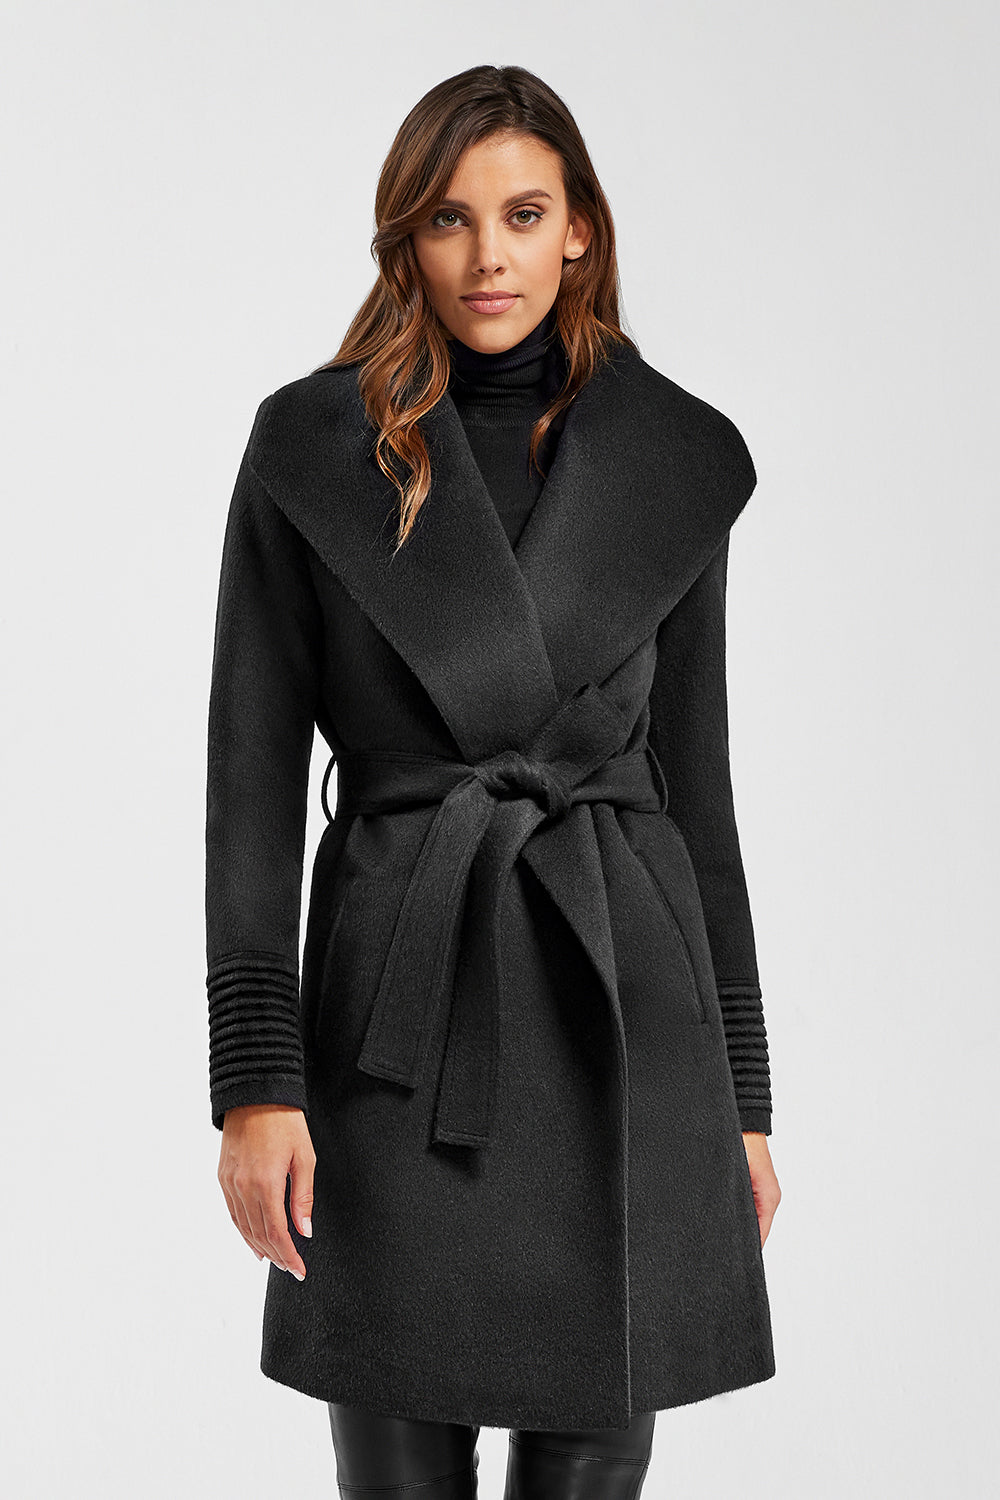 Calvin Klein Notched Collar Wrap Coat